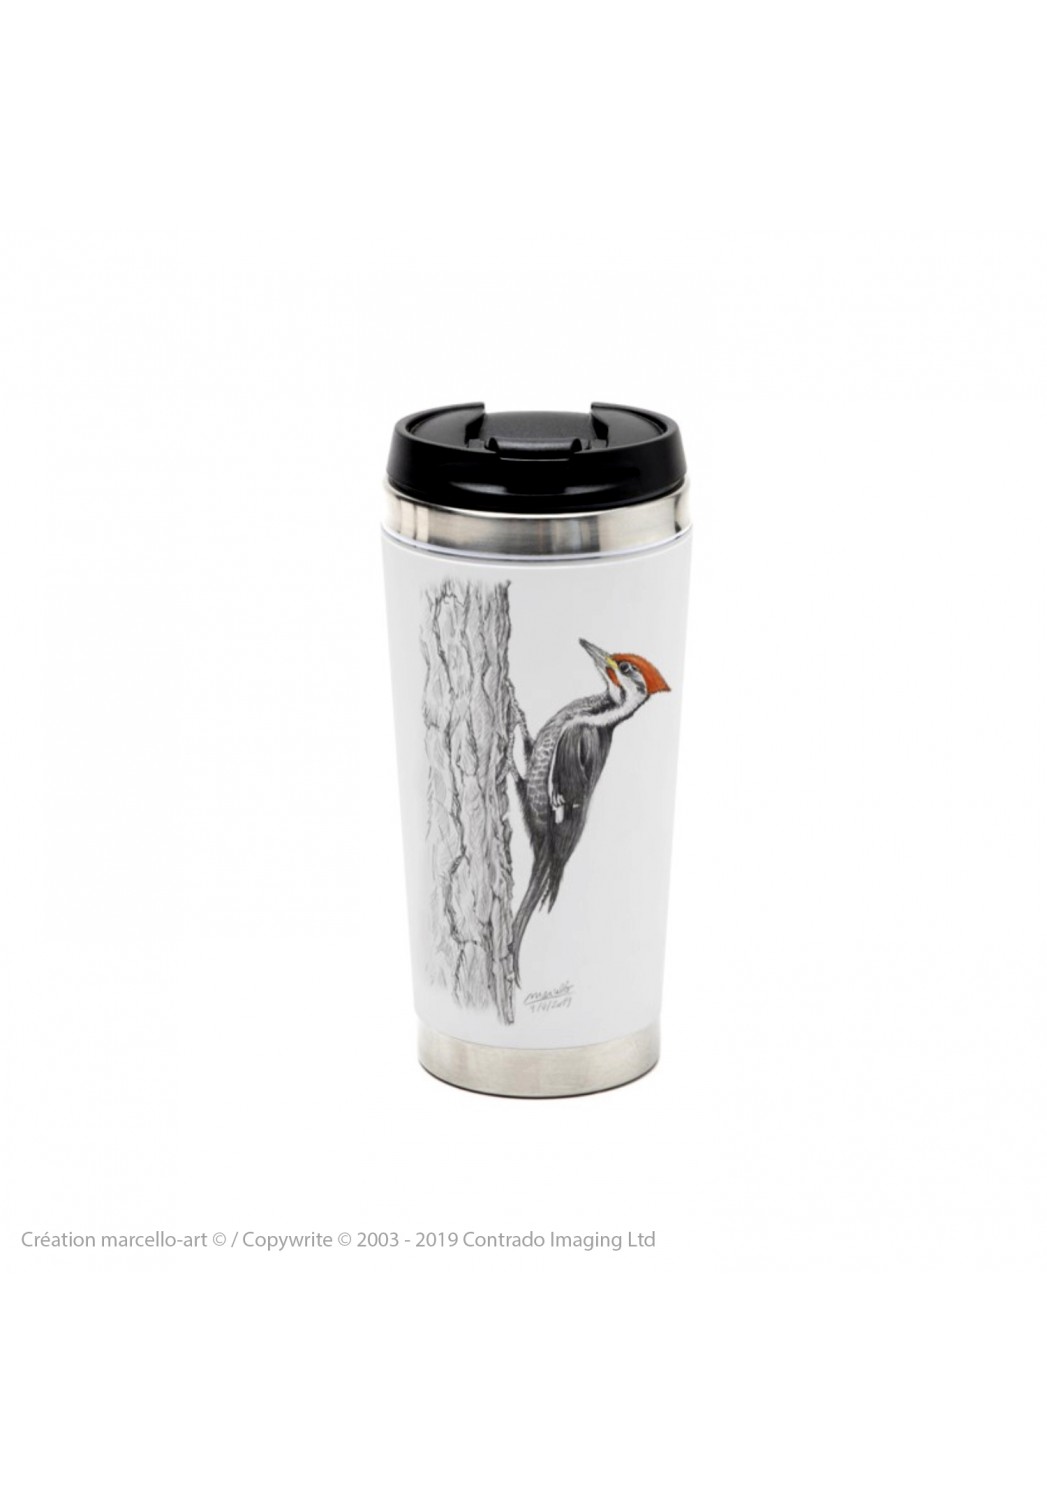 Marcello-art: Decoration accessoiries Thermos mug 393 black woodpecker